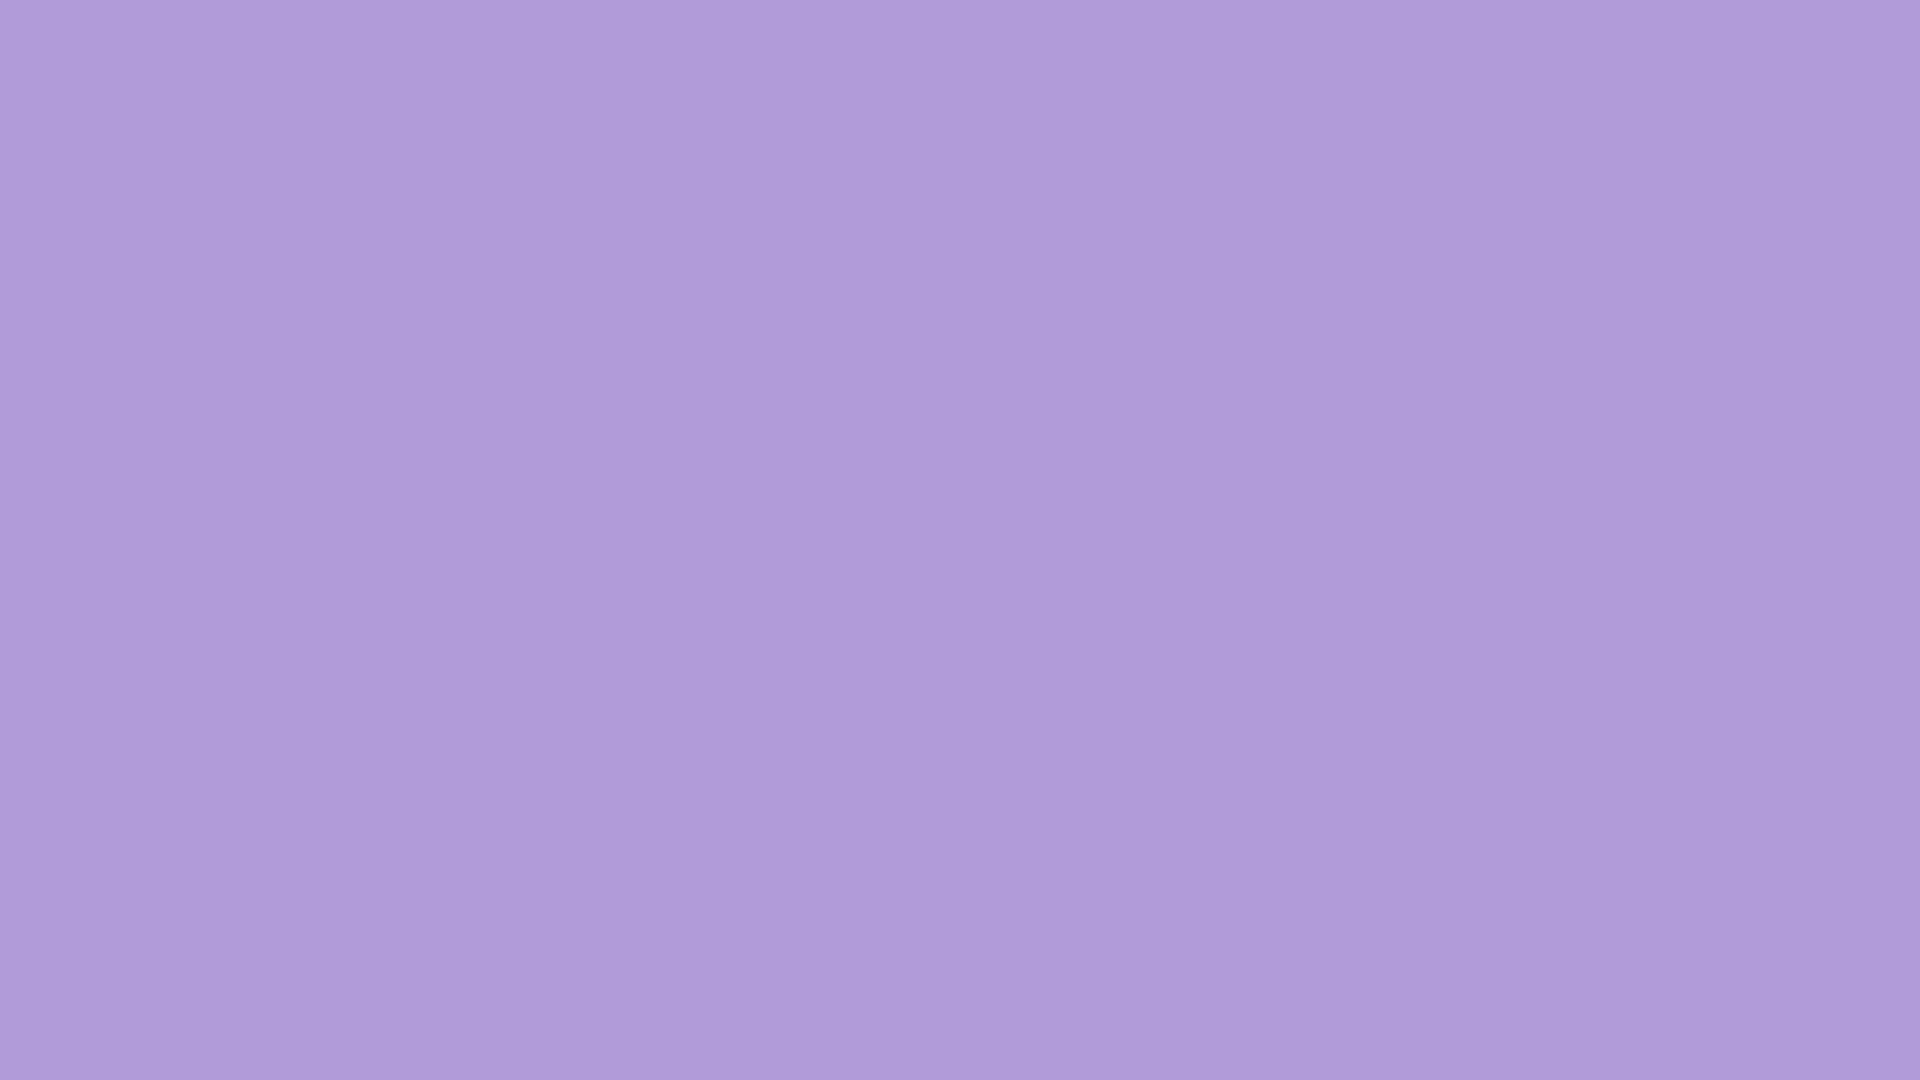 1920x1080 ... Light Pastel Purple Solid Color Background ...